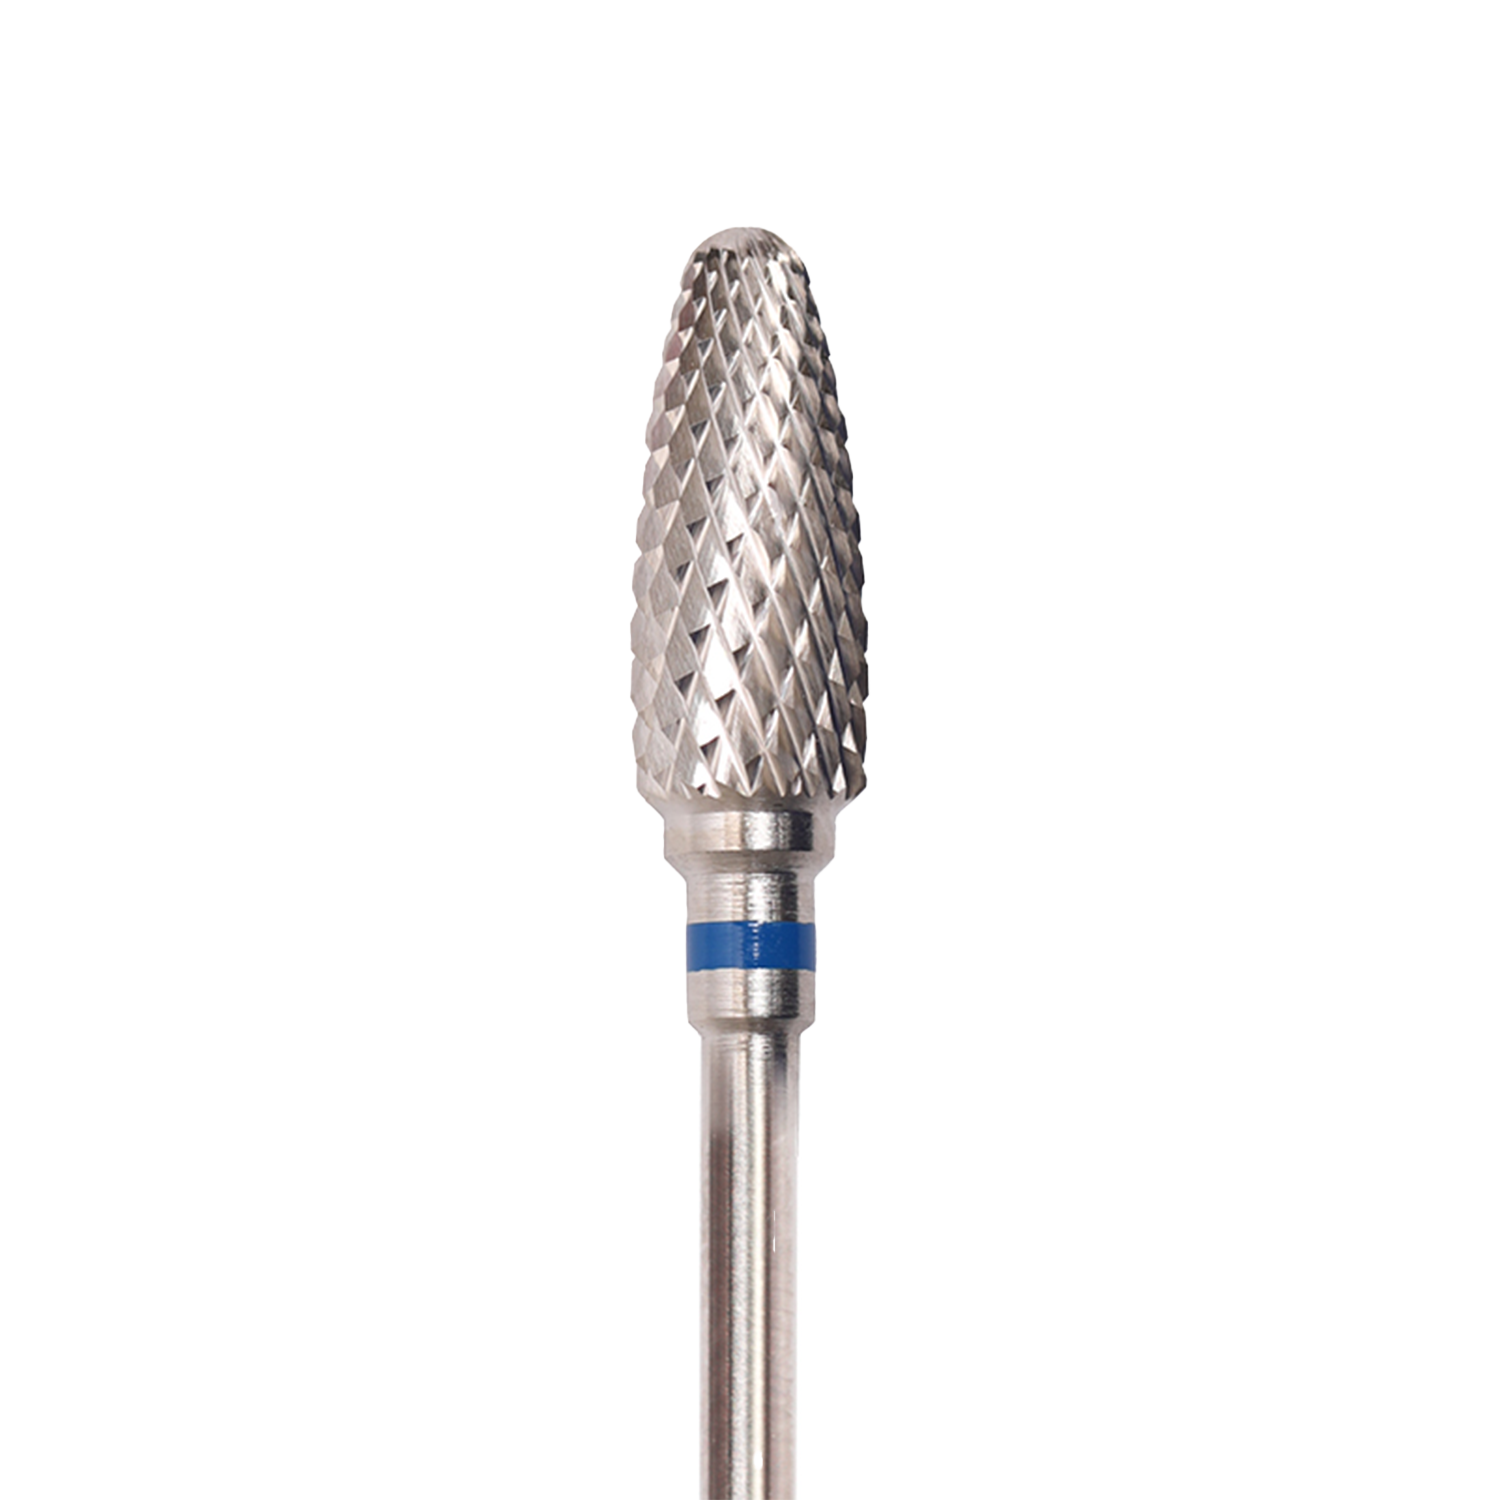 Corn-shaped carbide rotary file, 6 mm, medium abrasiveness